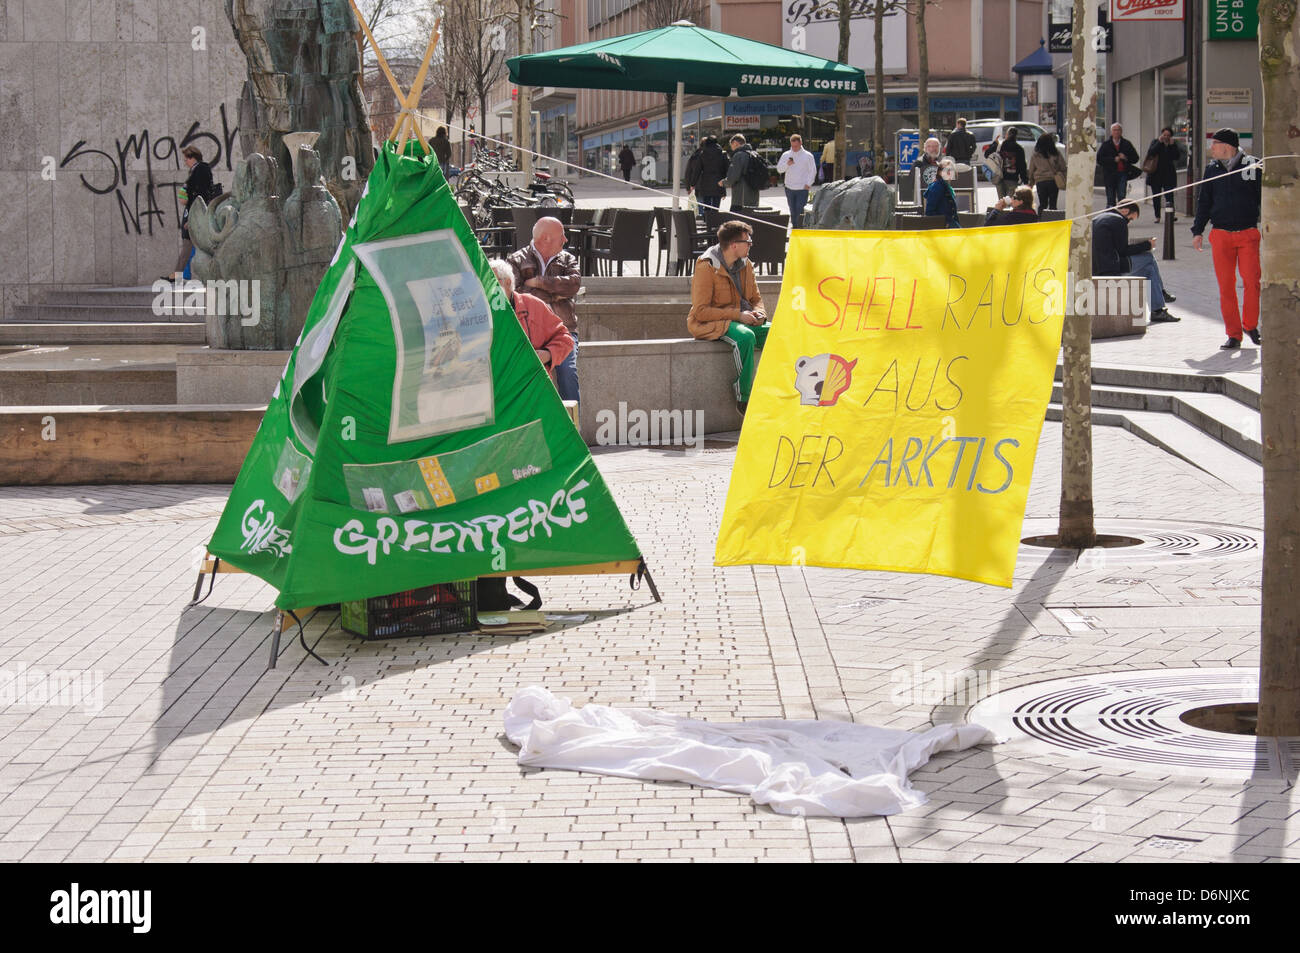 Greenpeace-Protest-Anzeige gegen Shell Oil Company in der Arktis, grünen Zelt, gelbe Banner - Heilbronn, Deutschland Stockfoto